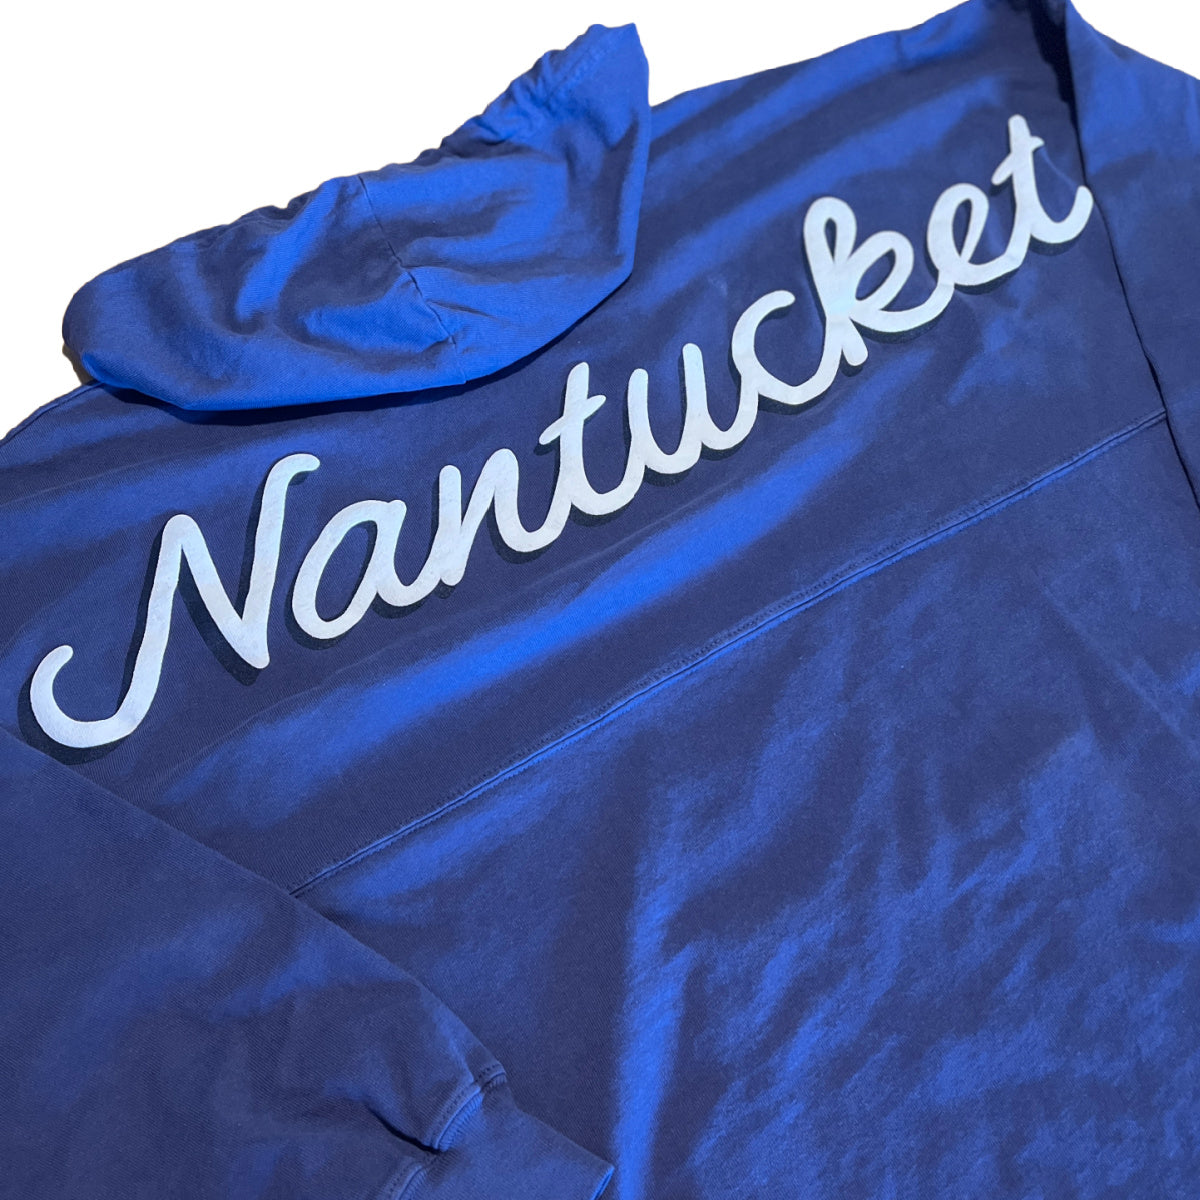 nantucket island pullover